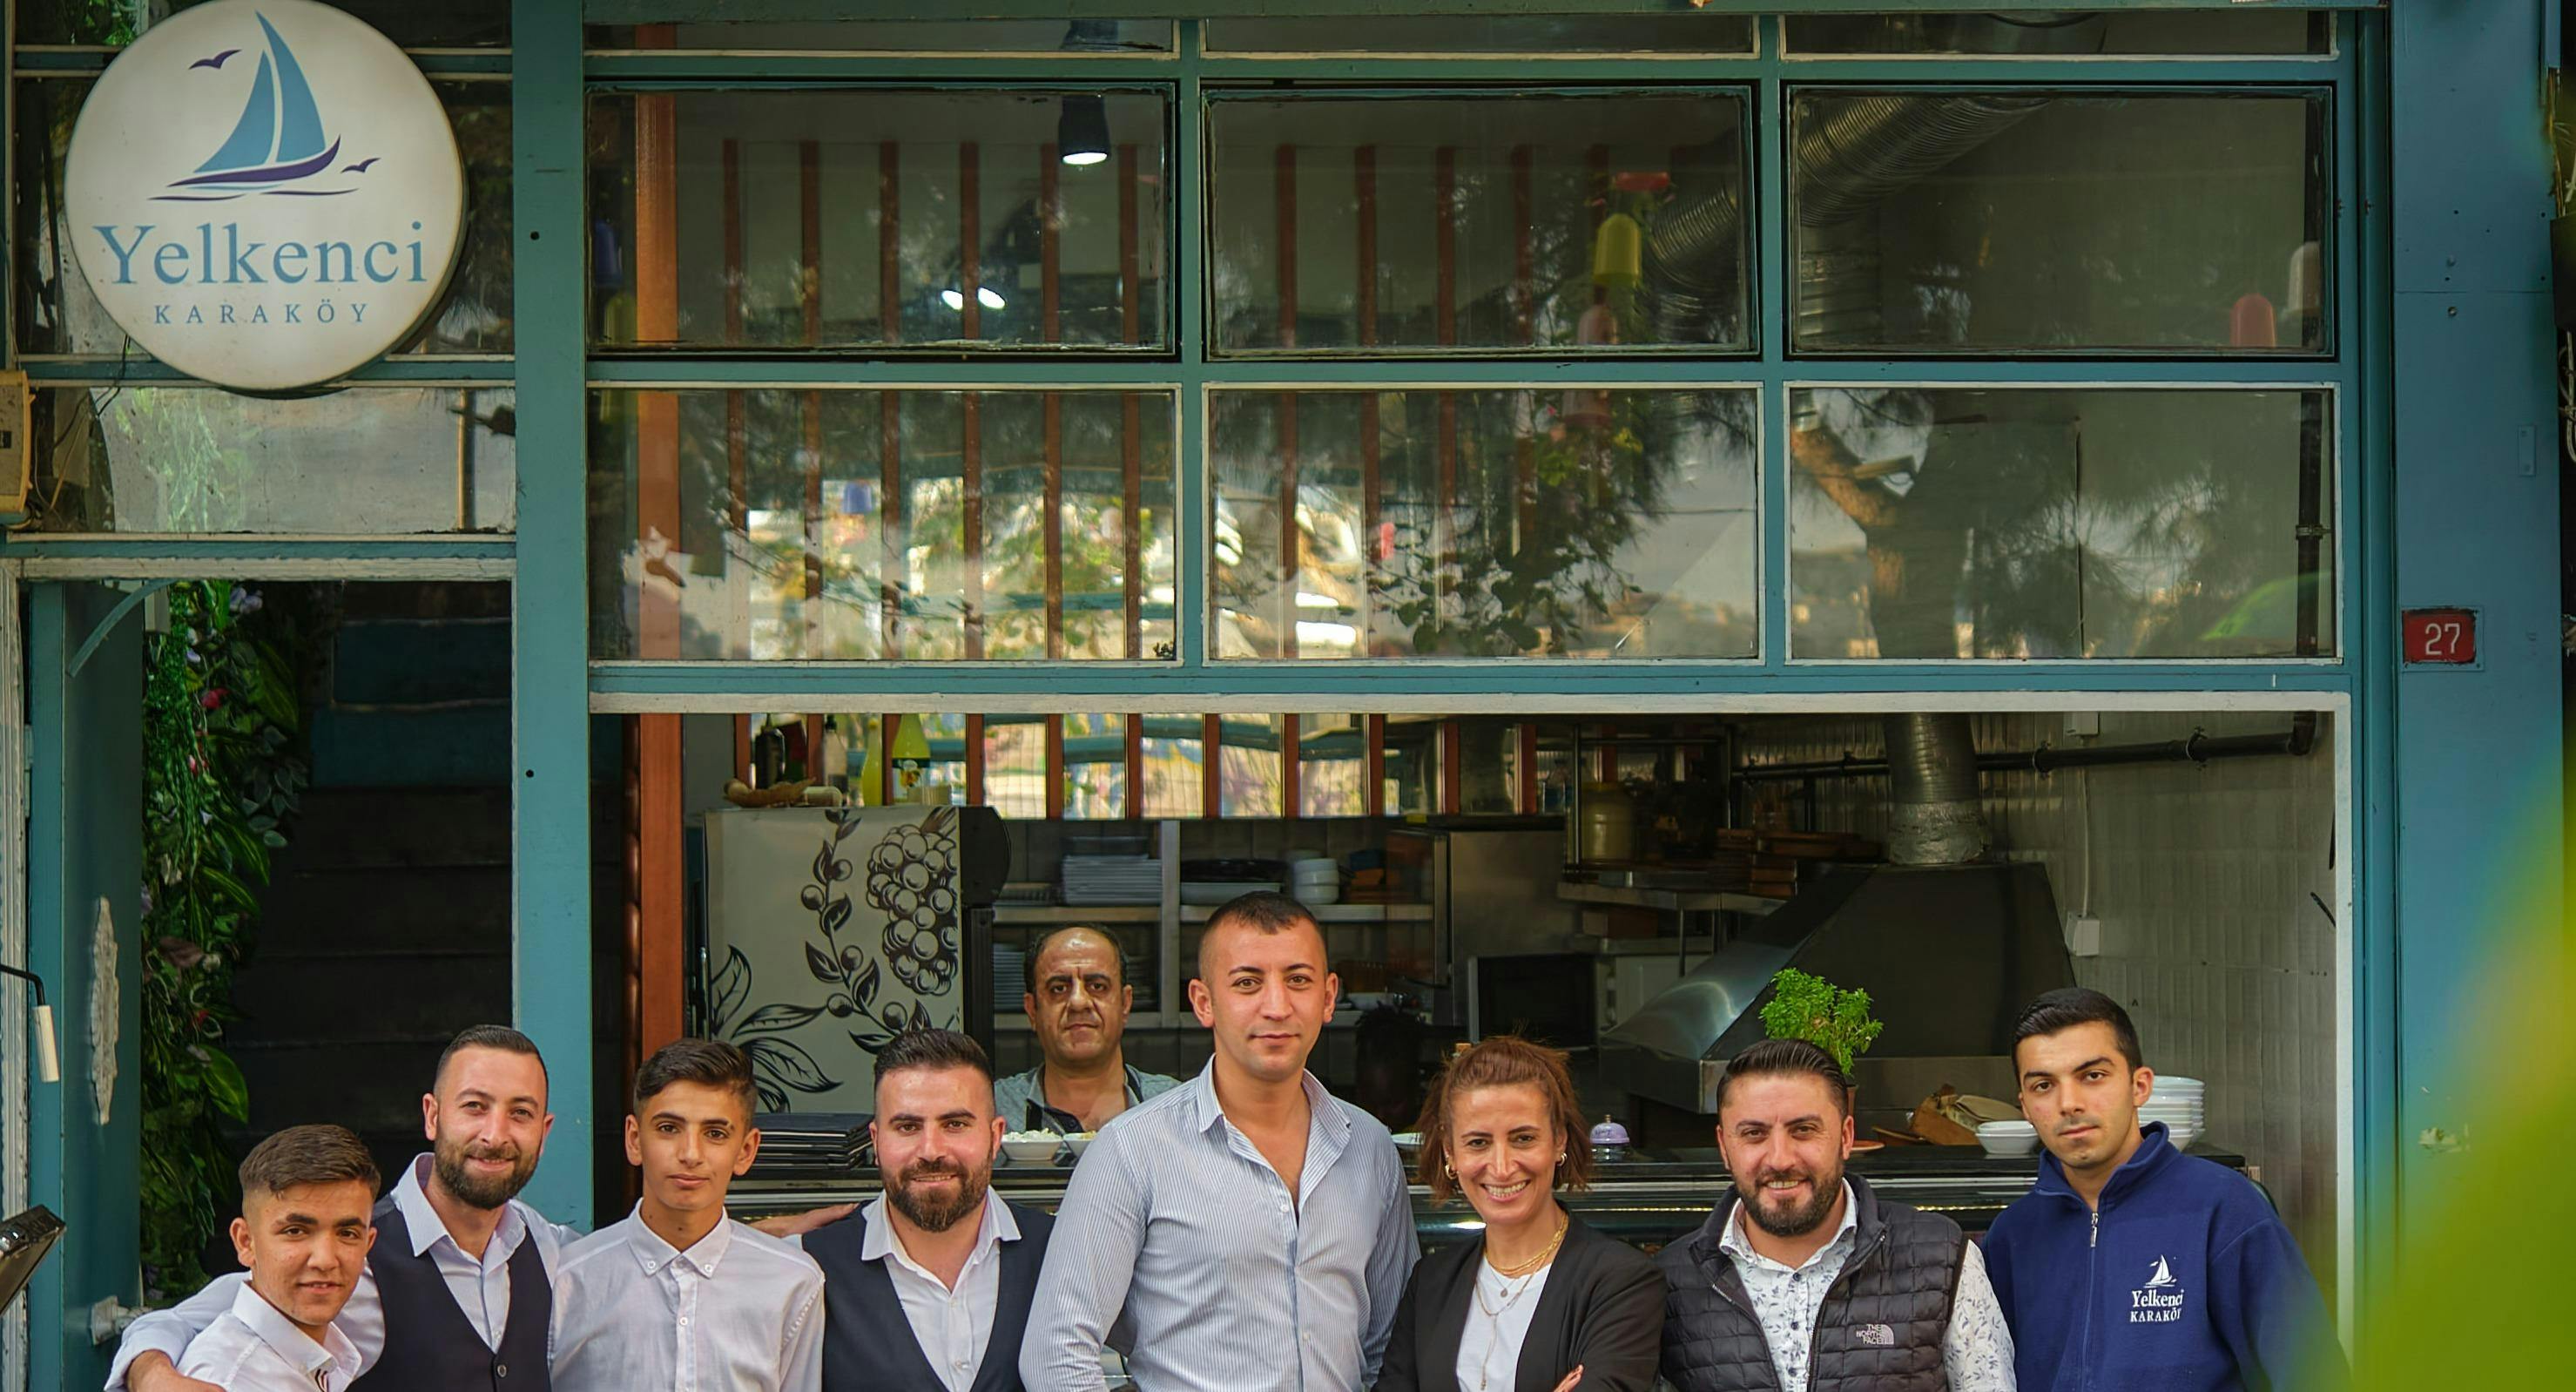 Photo of restaurant Yelkenci Karaköy Terrace in Karaköy, Istanbul